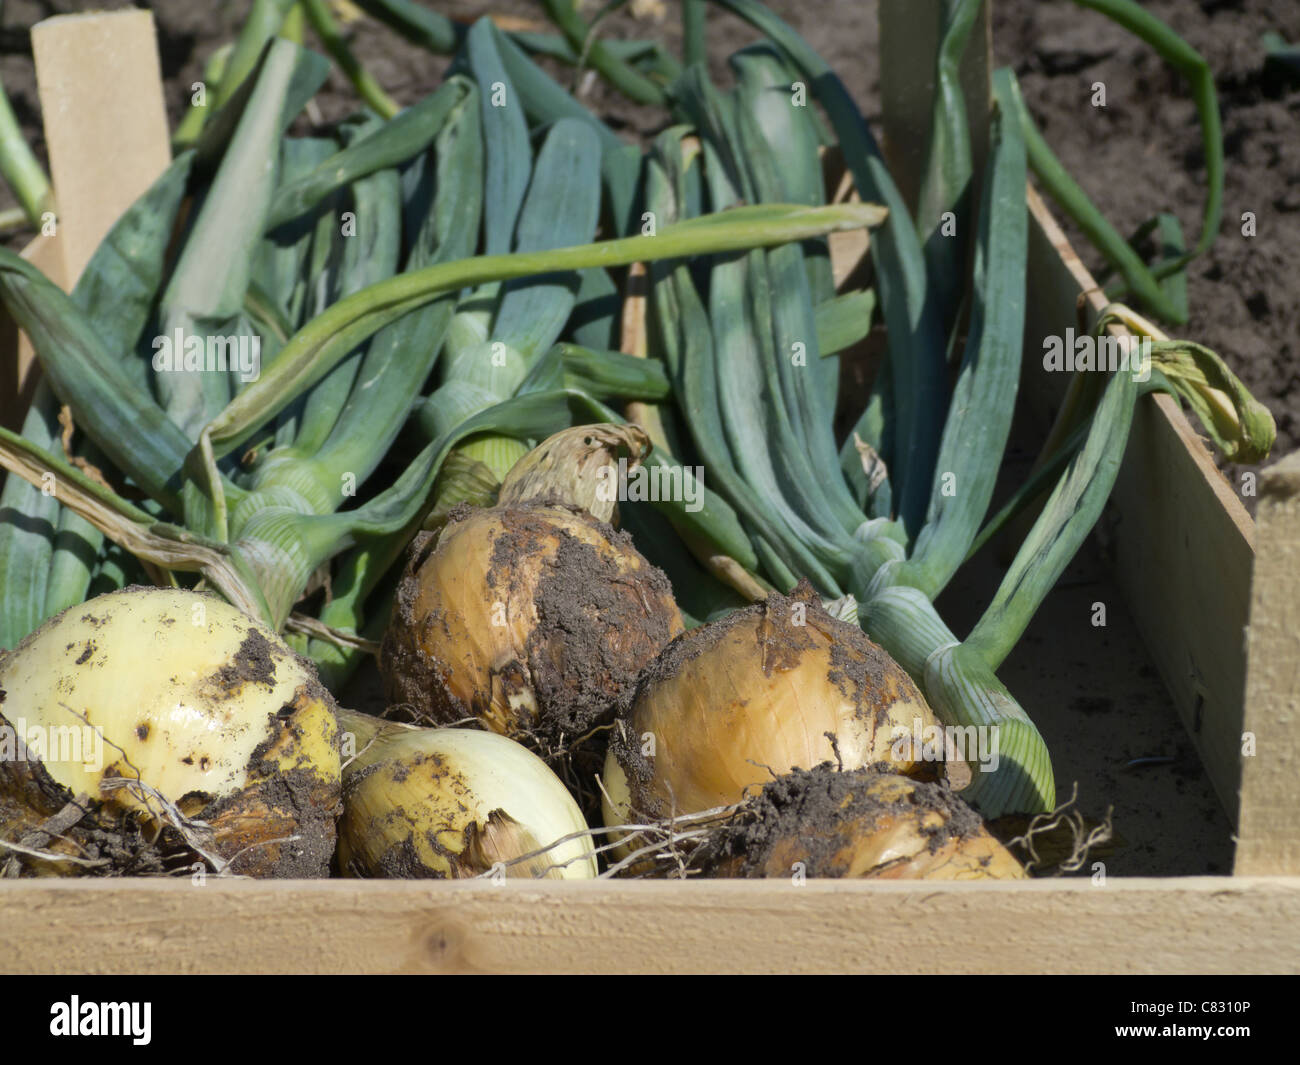 Onions Harvest in Box Stock Photo